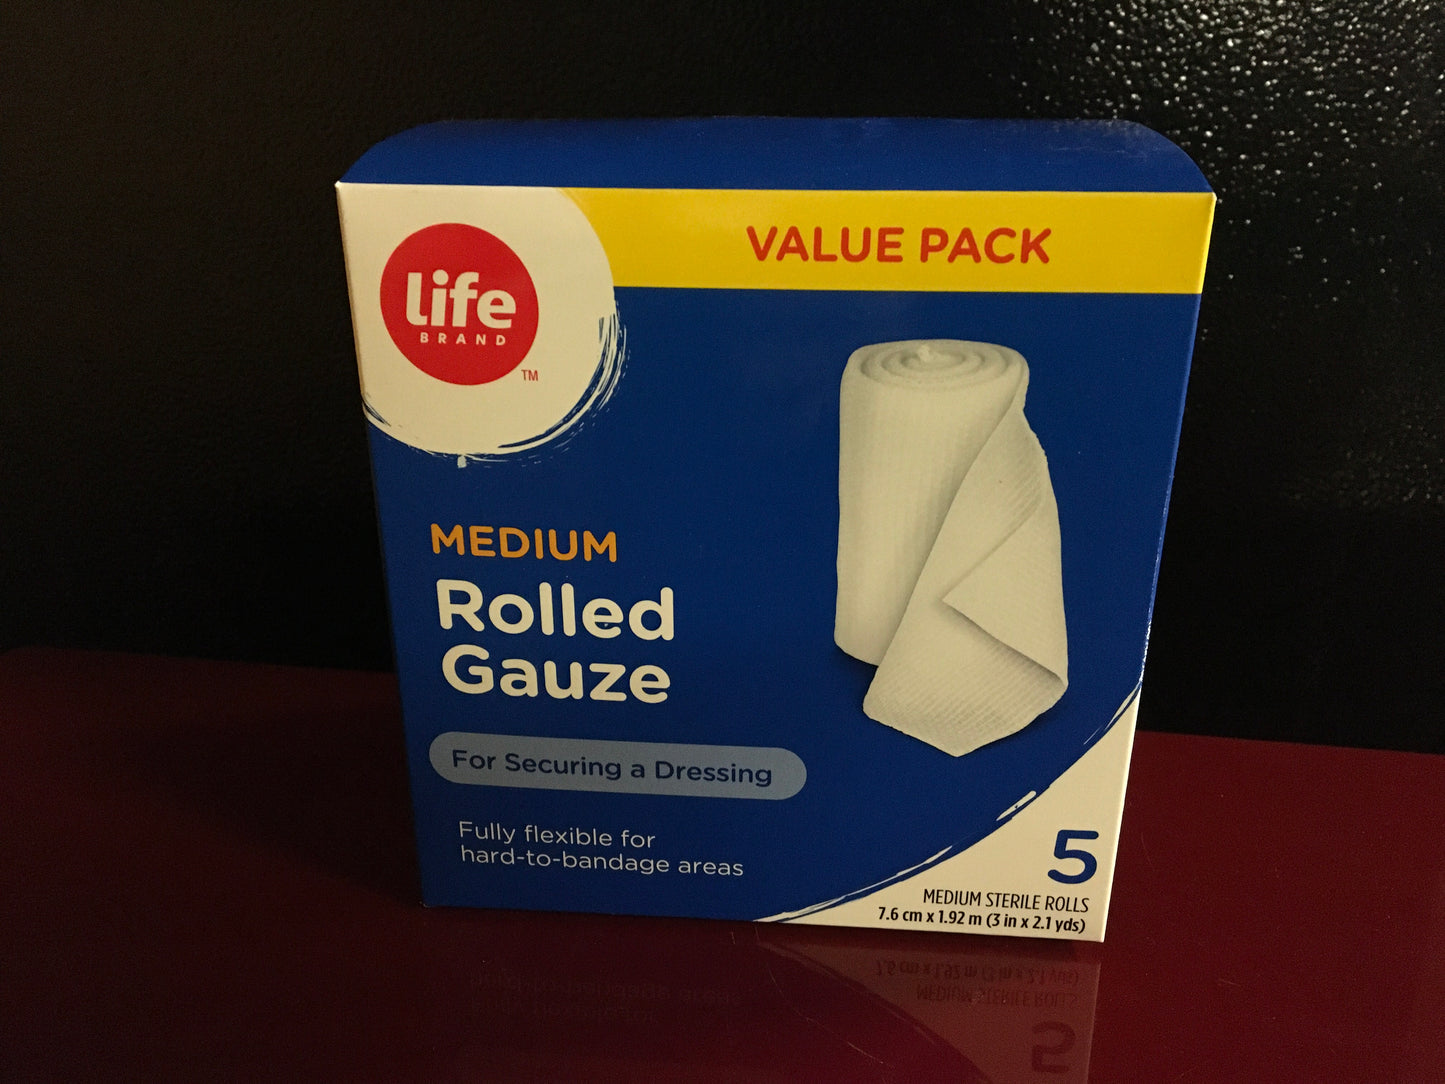 Life Brand Value Pack Medium Rolled Gauze